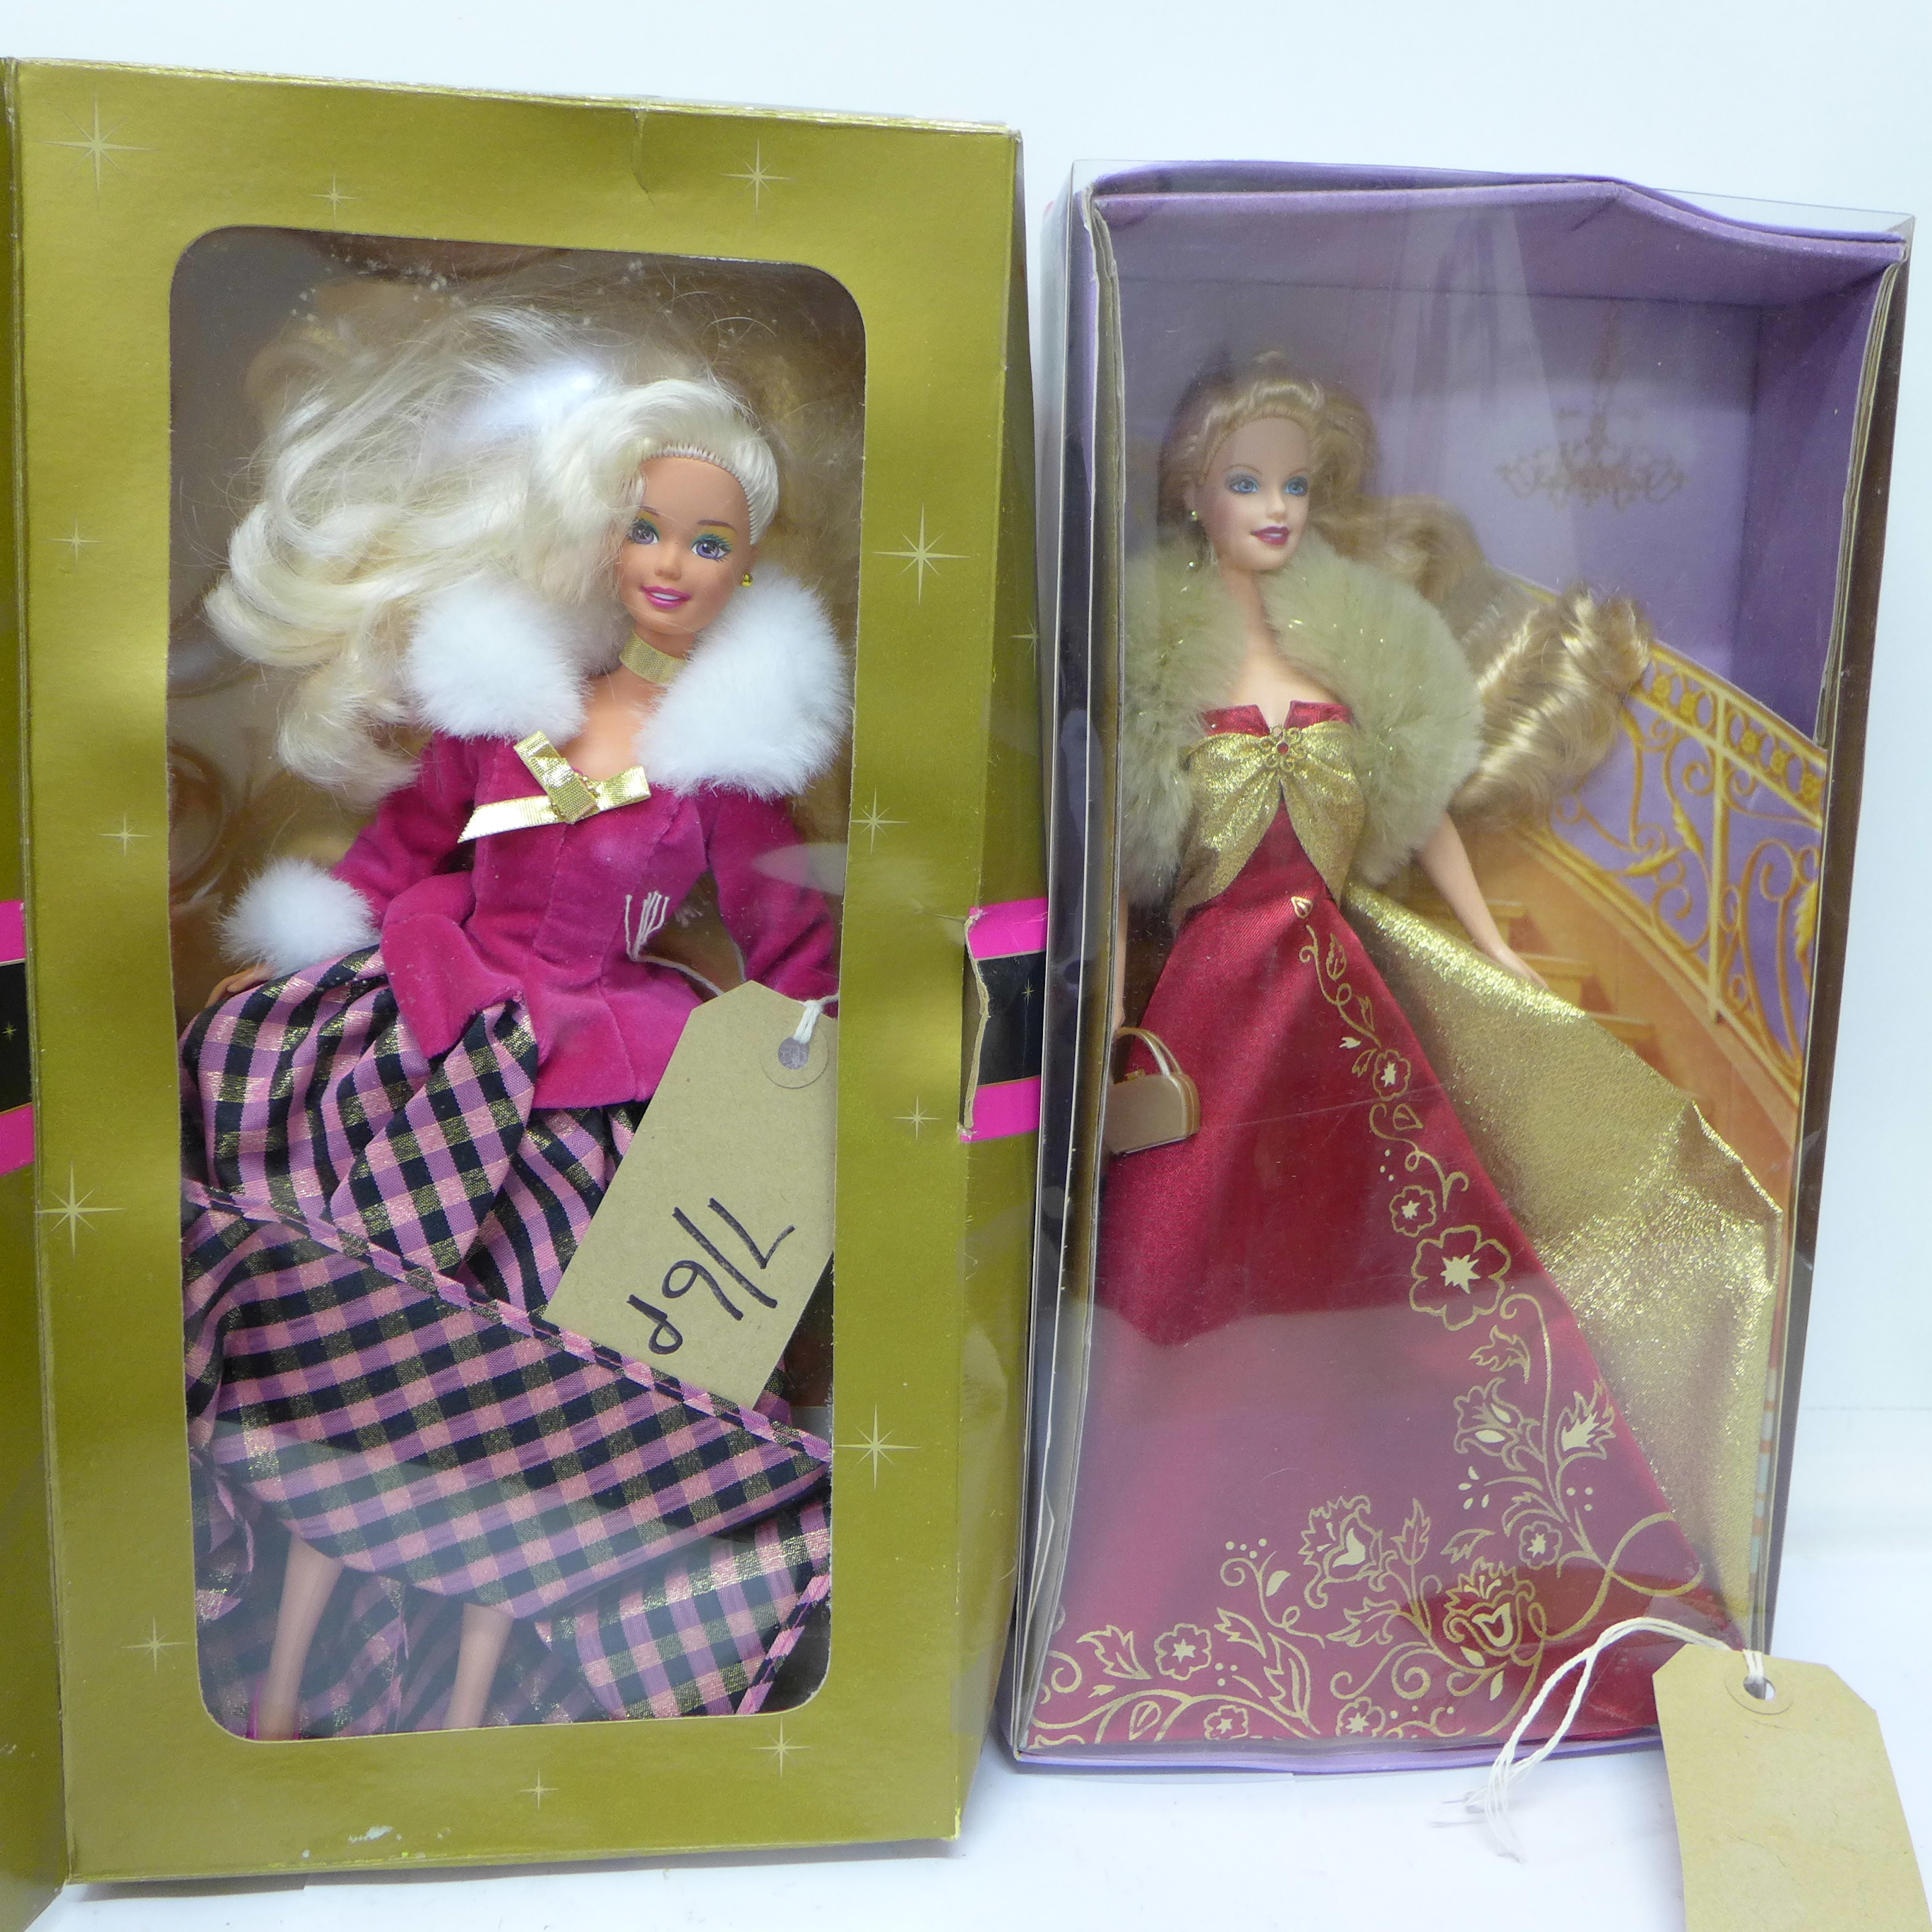 Two Barbie dolls